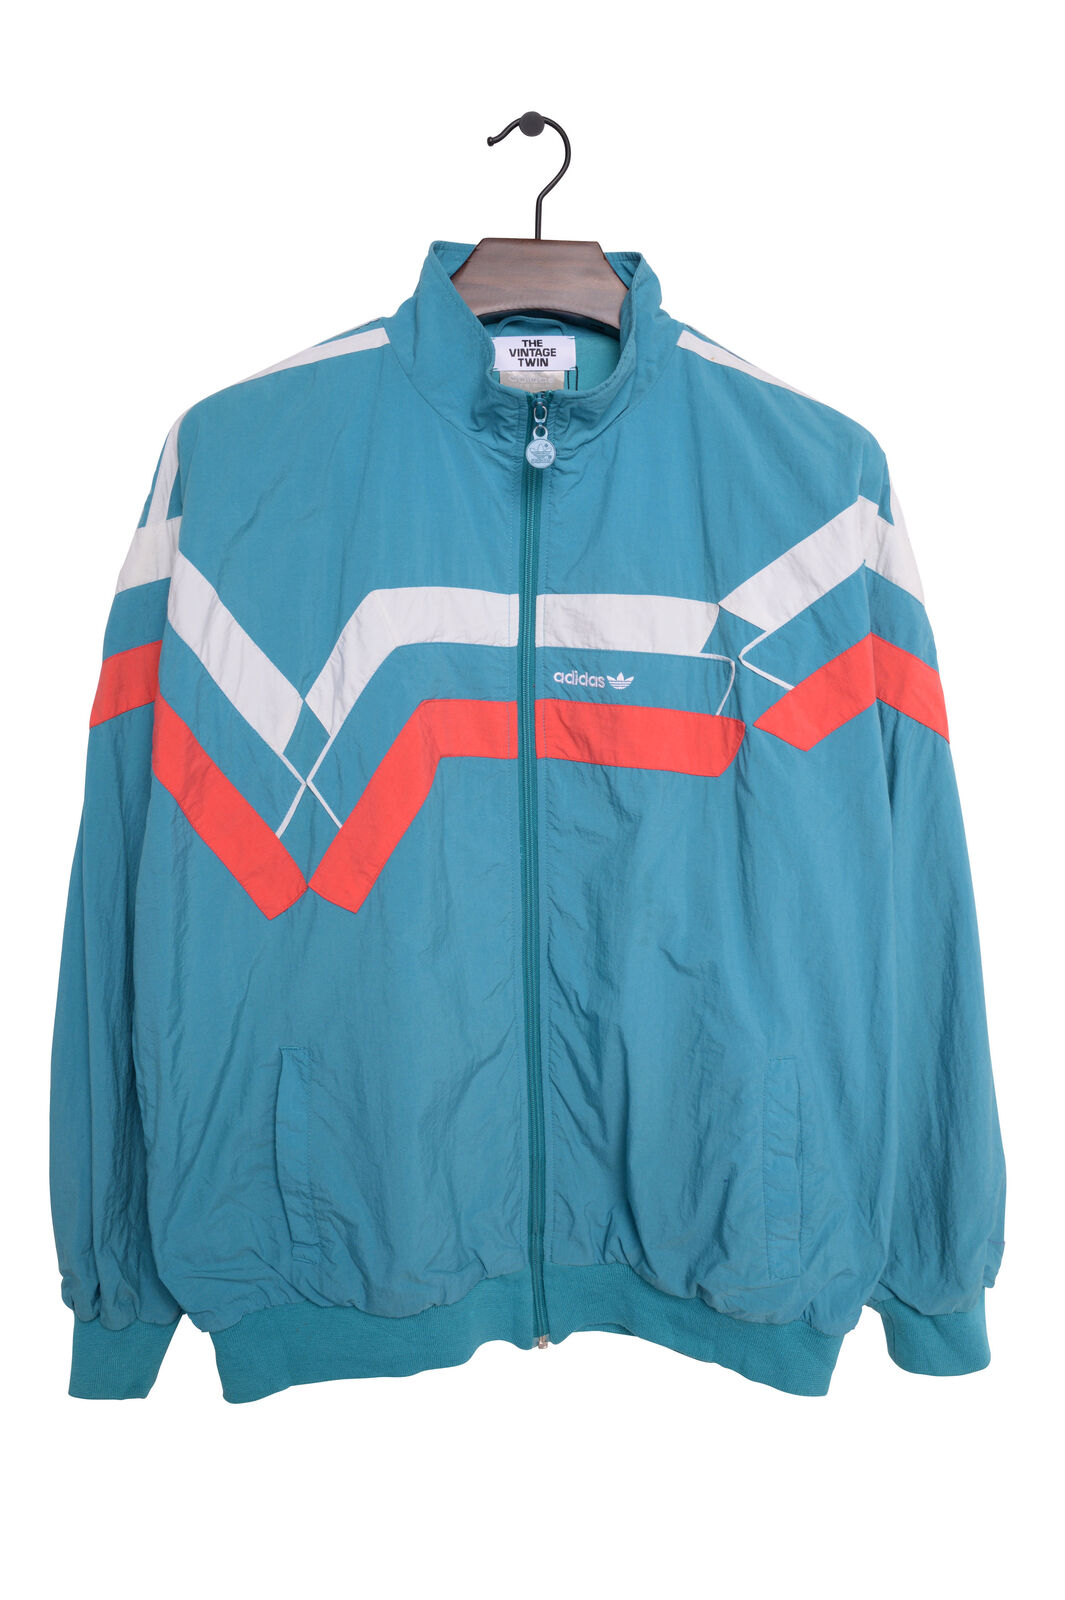 1980s Adidas Windbreaker - image 1